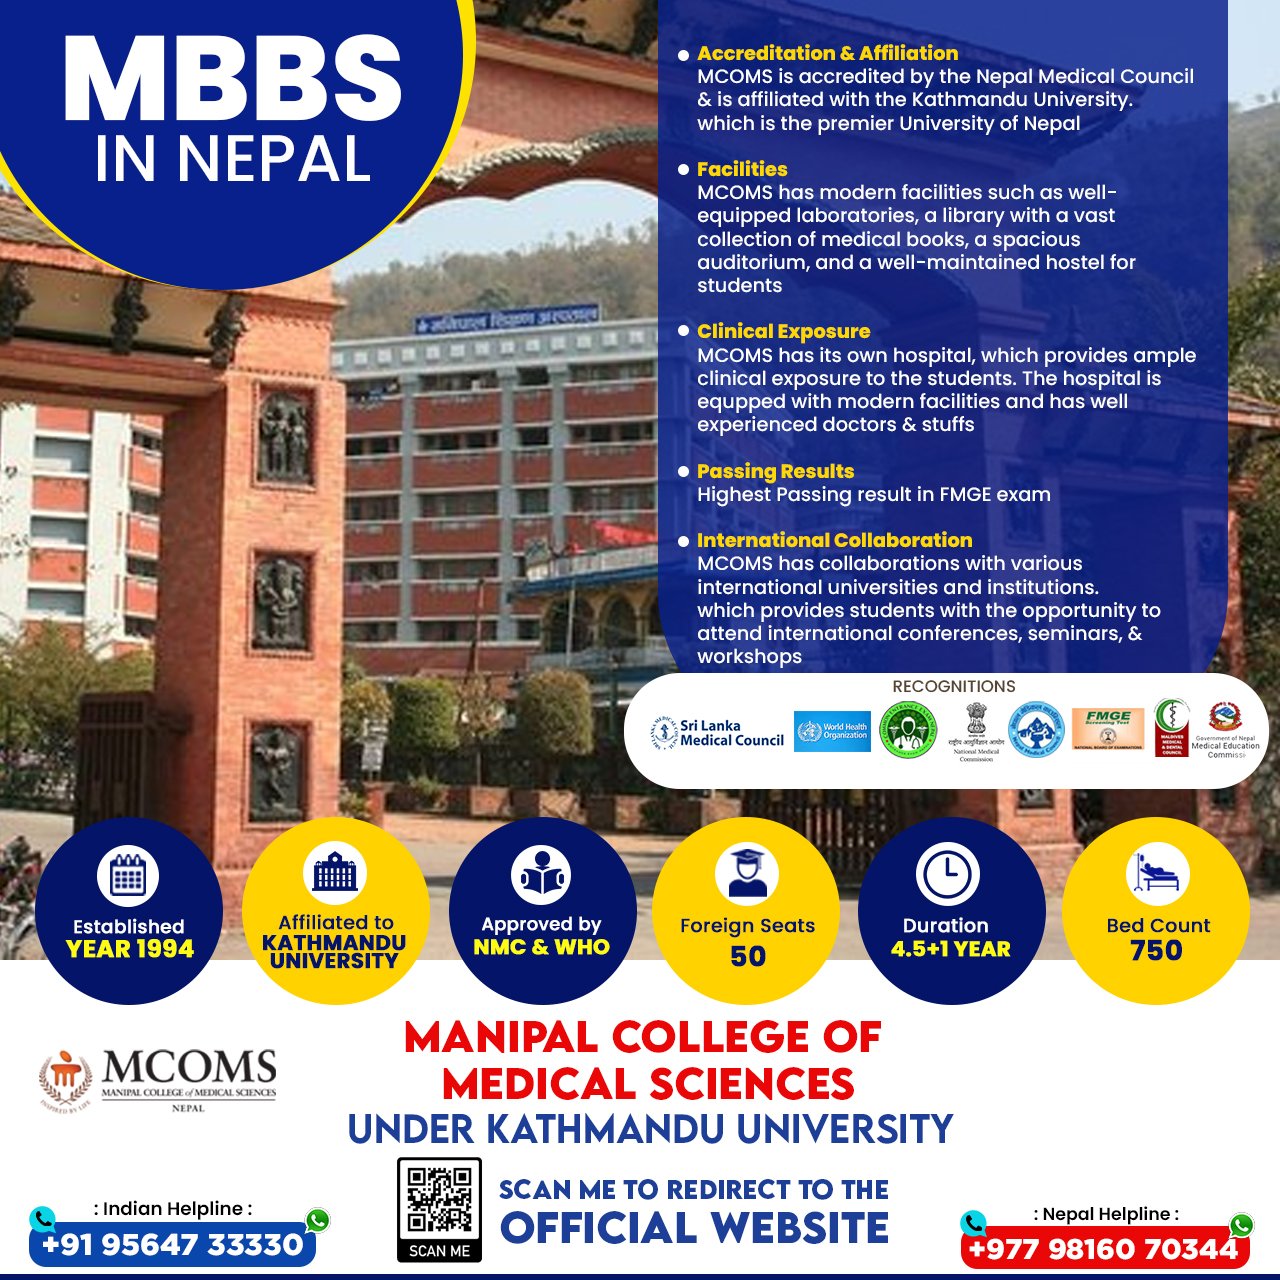 mbbs-in-nepal-at-manipal-college-of-medical-sciences-nepal-under-kathmandu-university